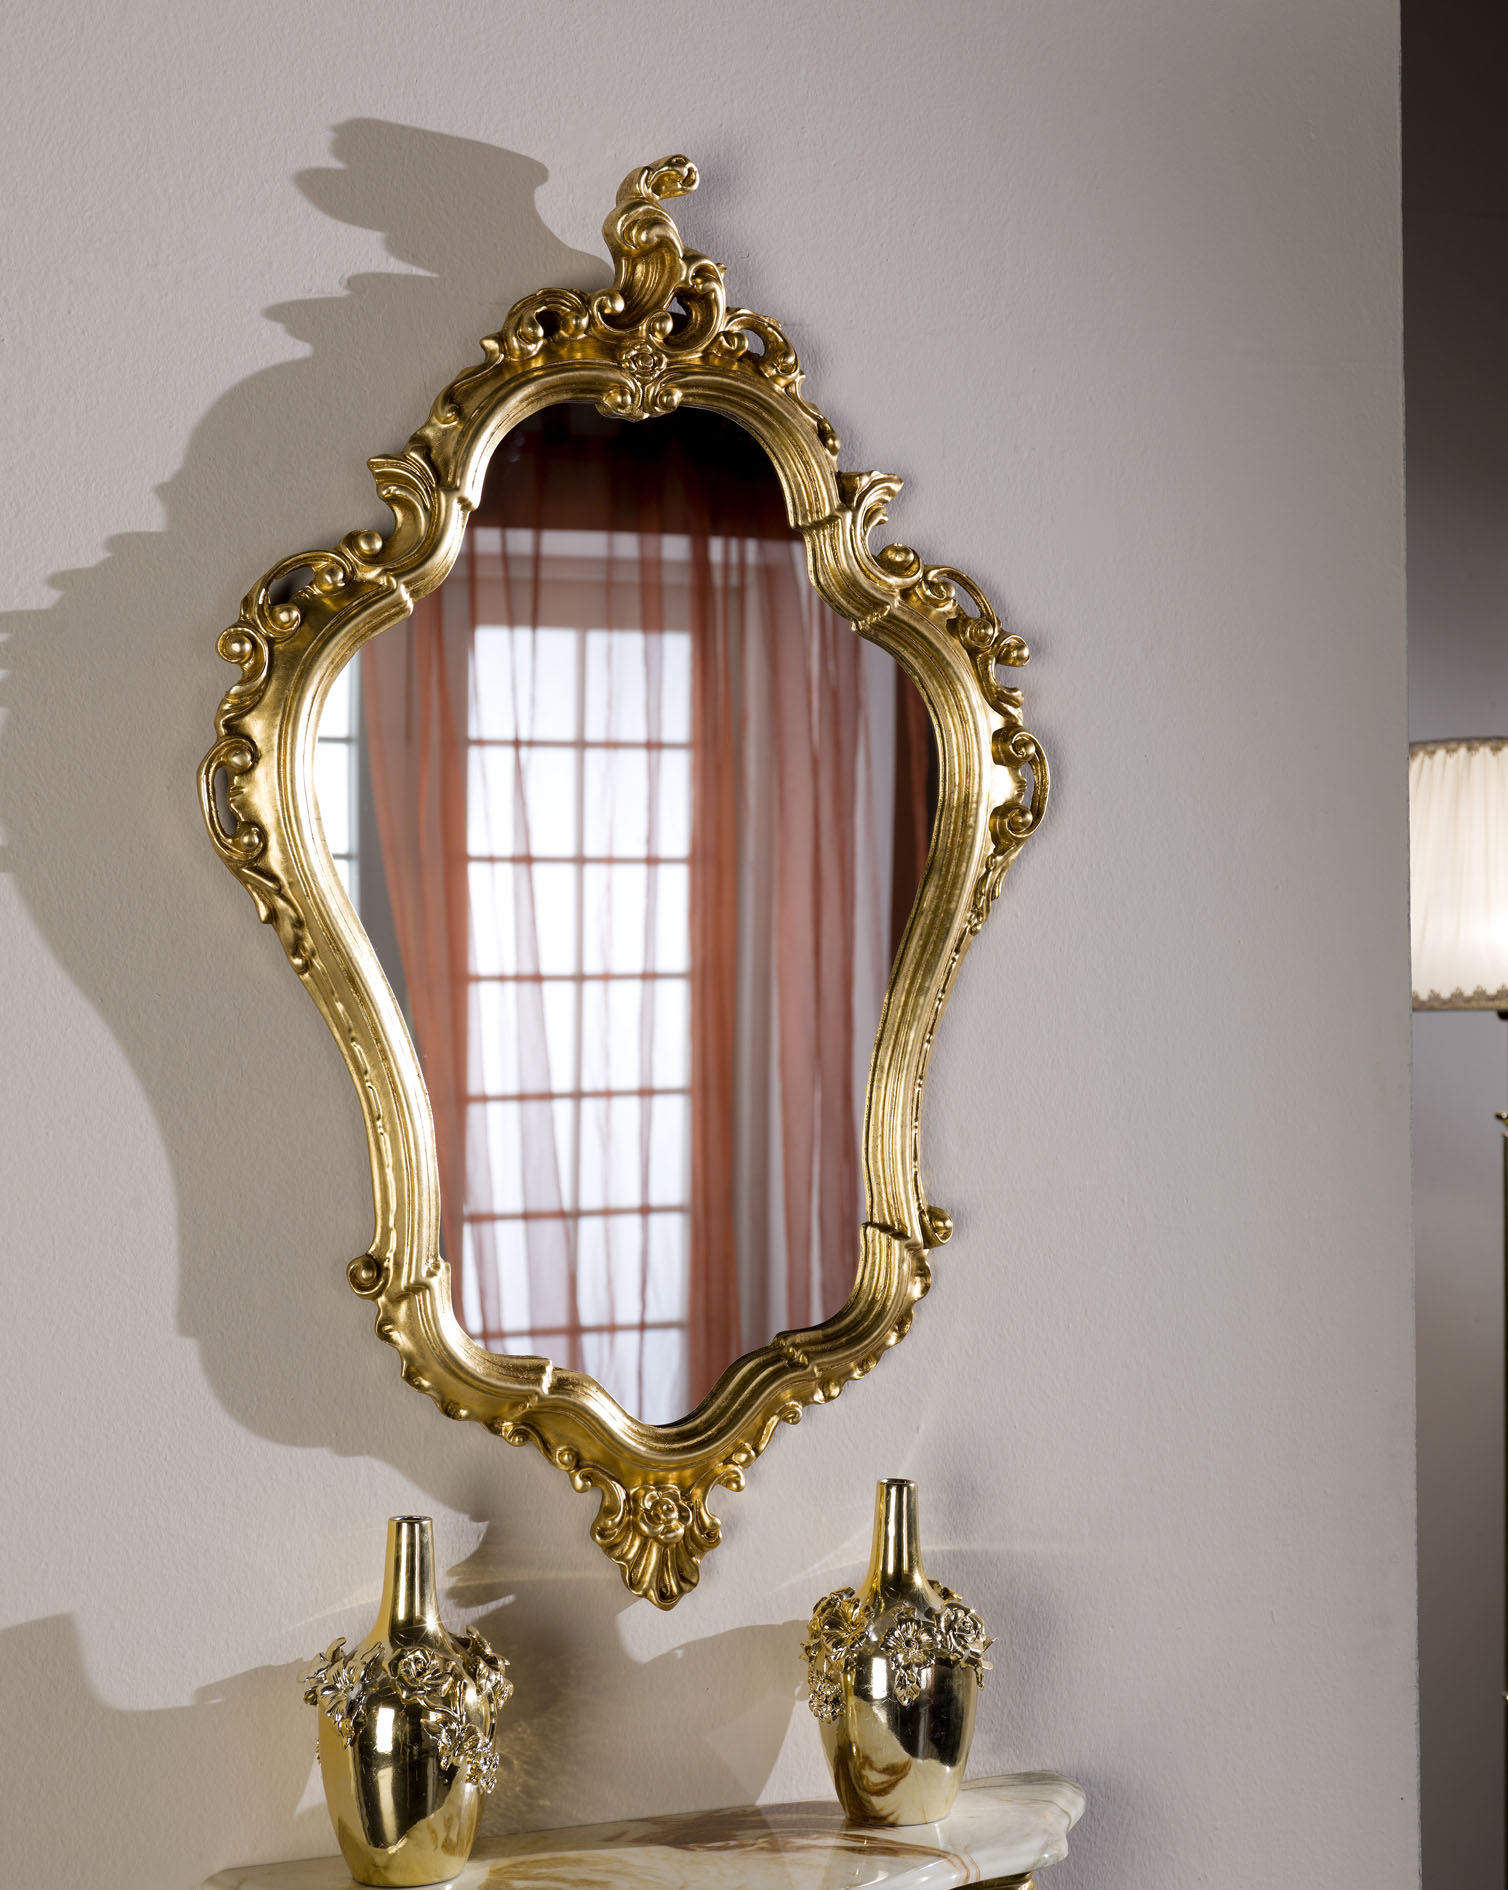 Barockspiegel Modell Katharina, Form konturiert, Finishing Blattgold, Style klassisch, Ansicht groß an Wand hängend